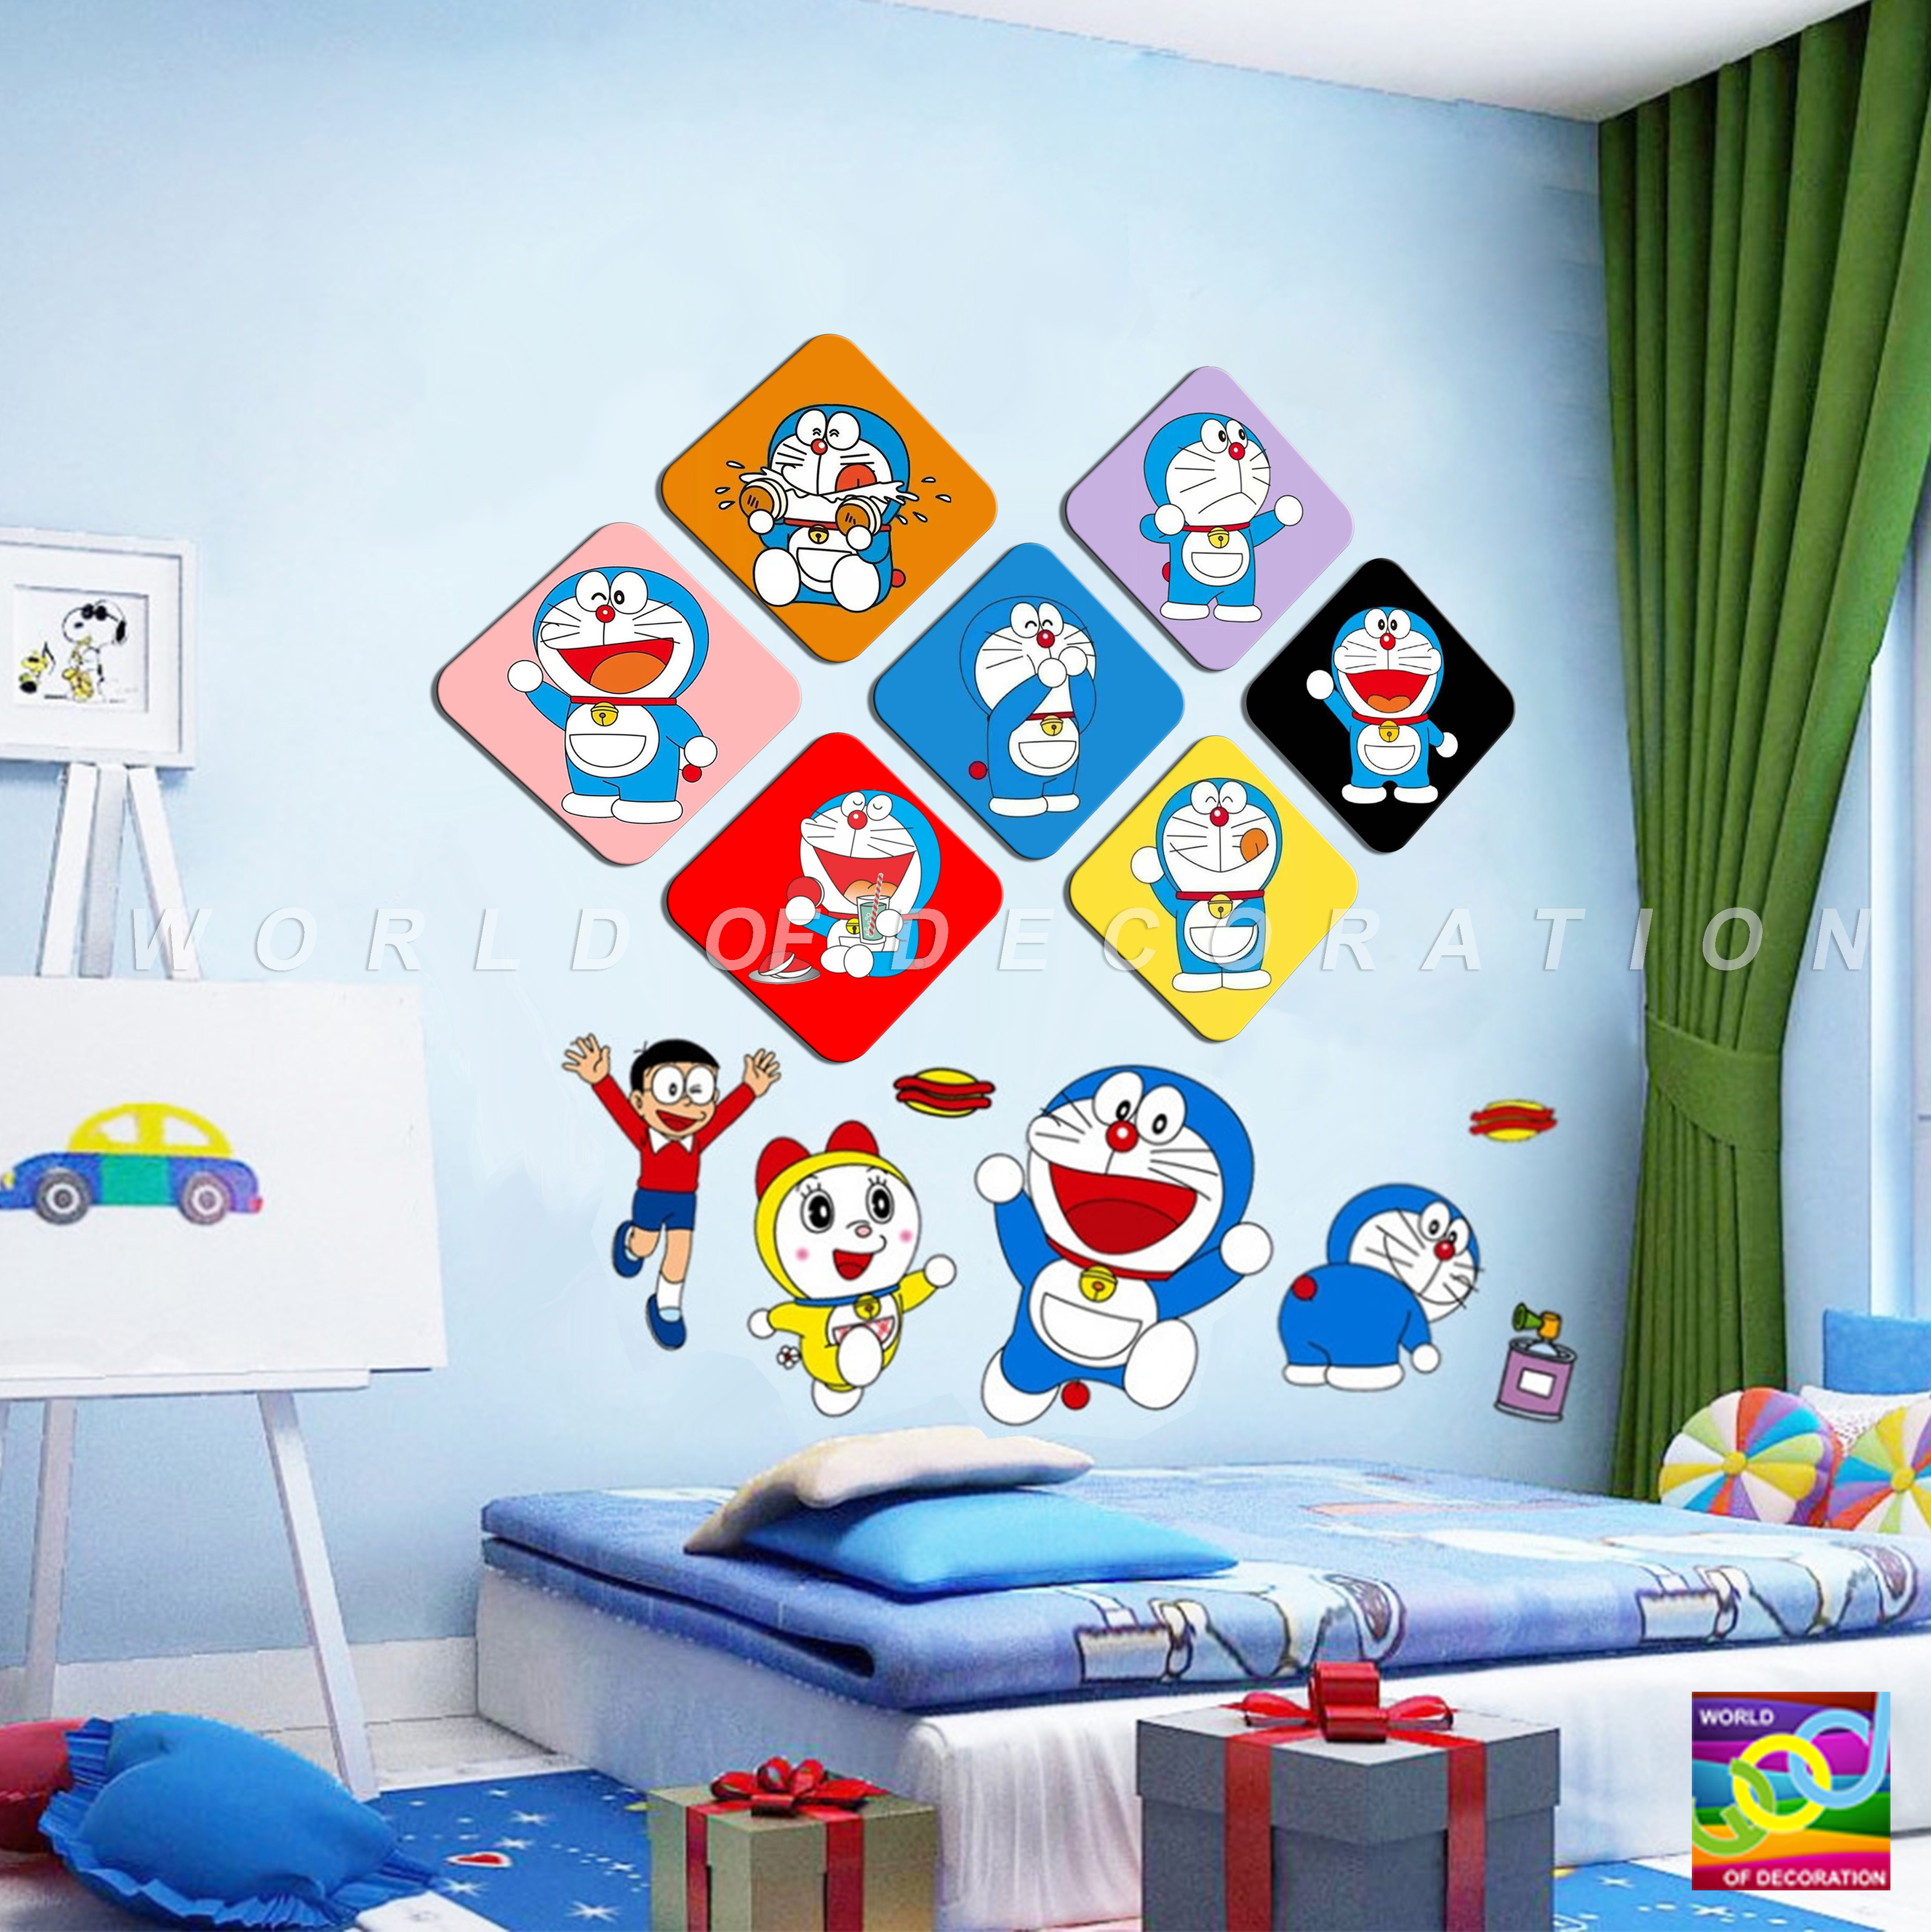 Jual Hiasan Kamar Doraemon Terbaru Lazada Co Id